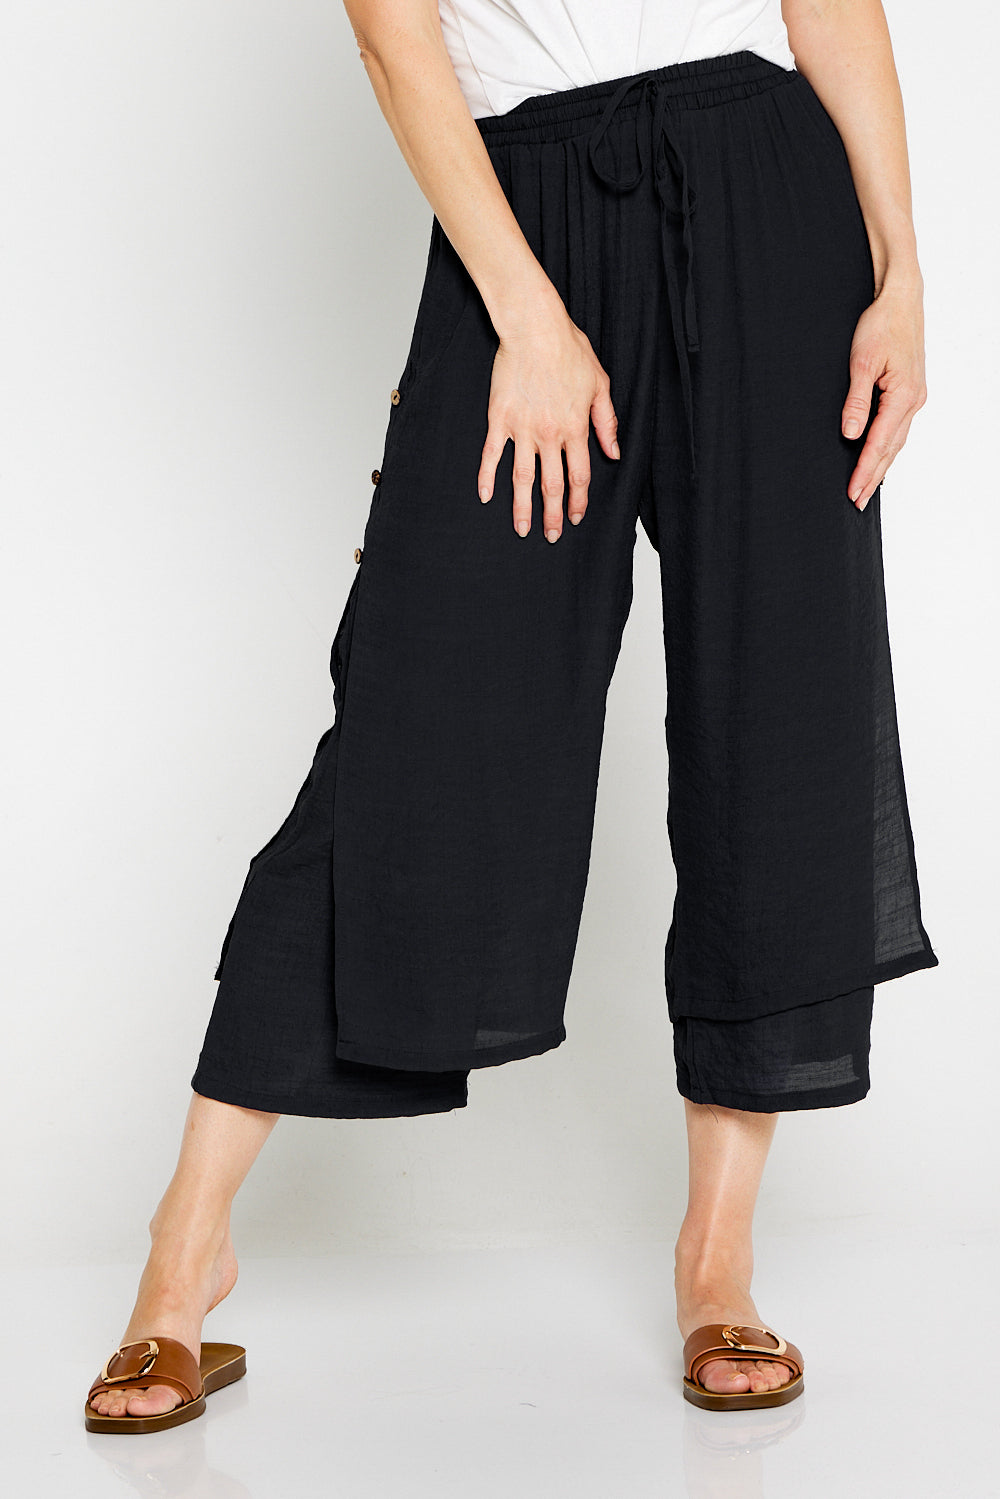 Liana Cropped Pants - Black